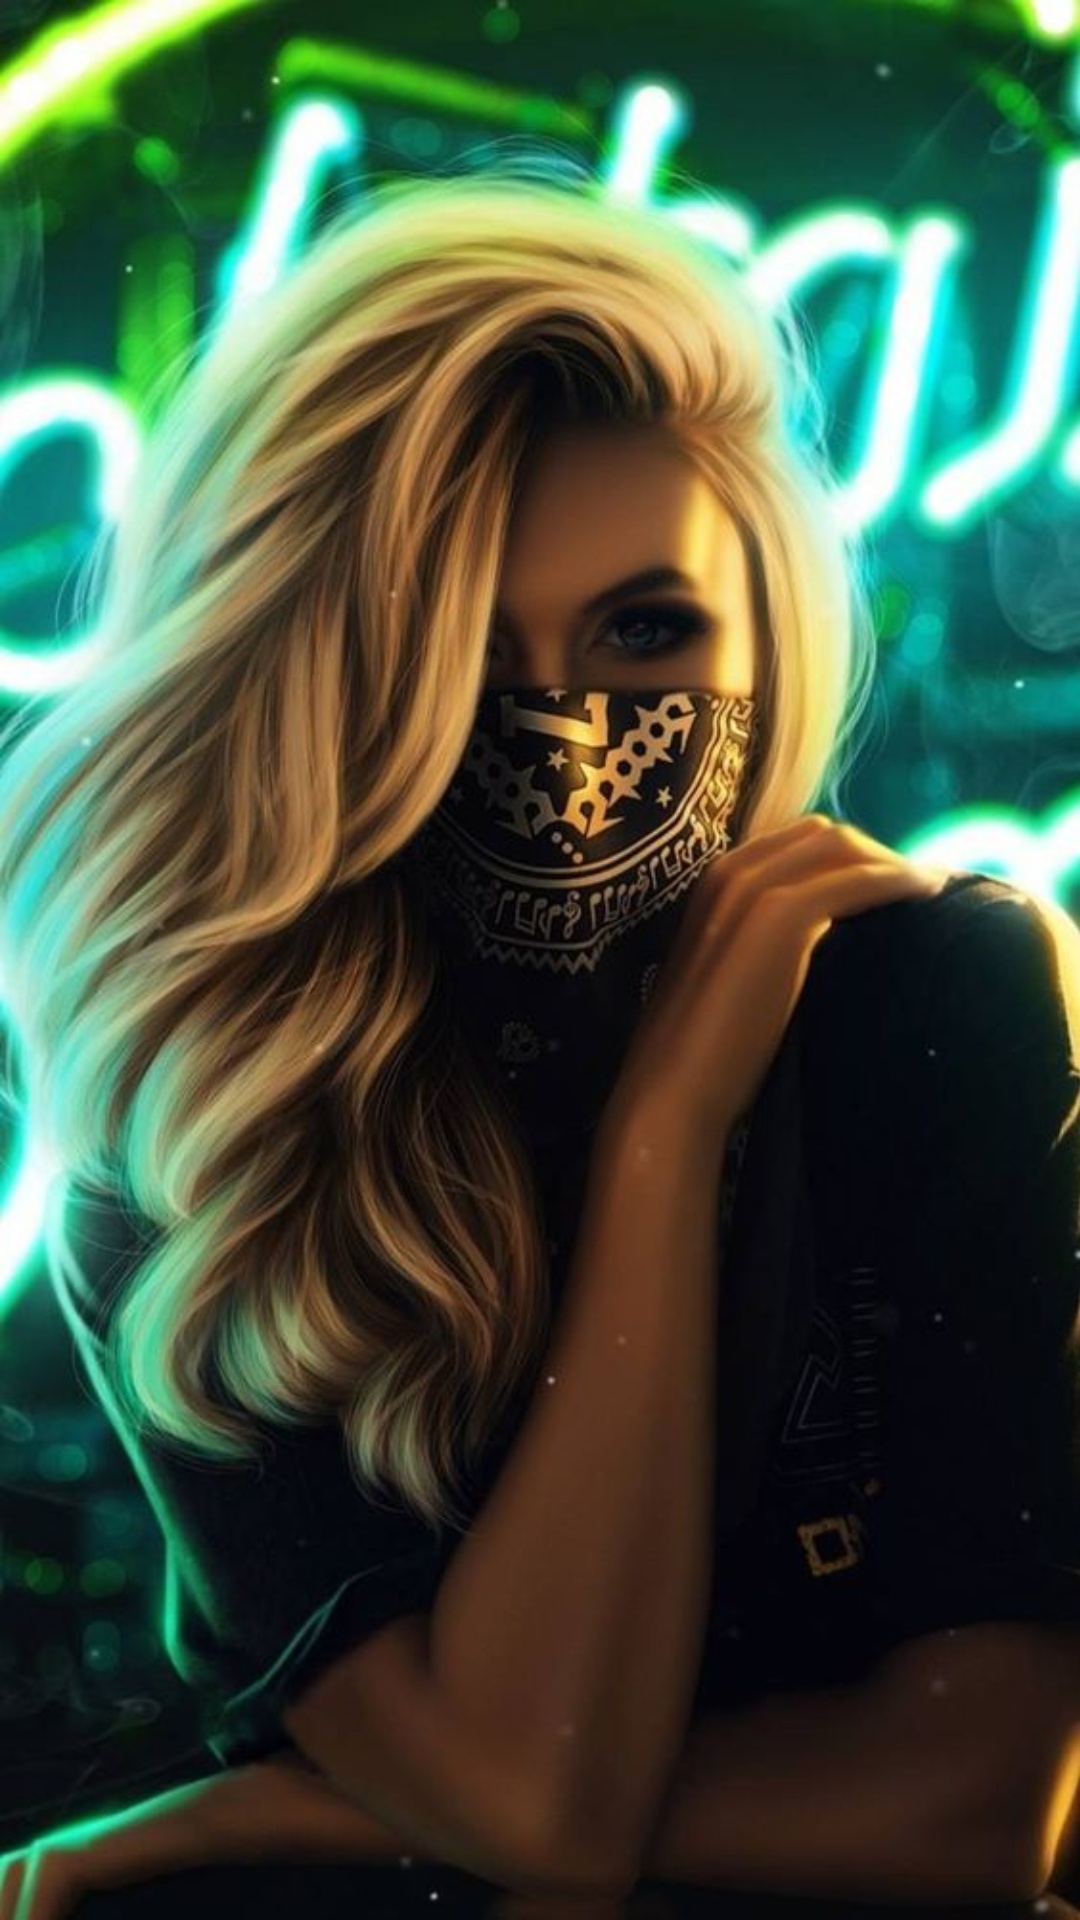 Neon Mask Girl Wallpapers - Top 30 Best Neon Mask Girl Wallpapers Download